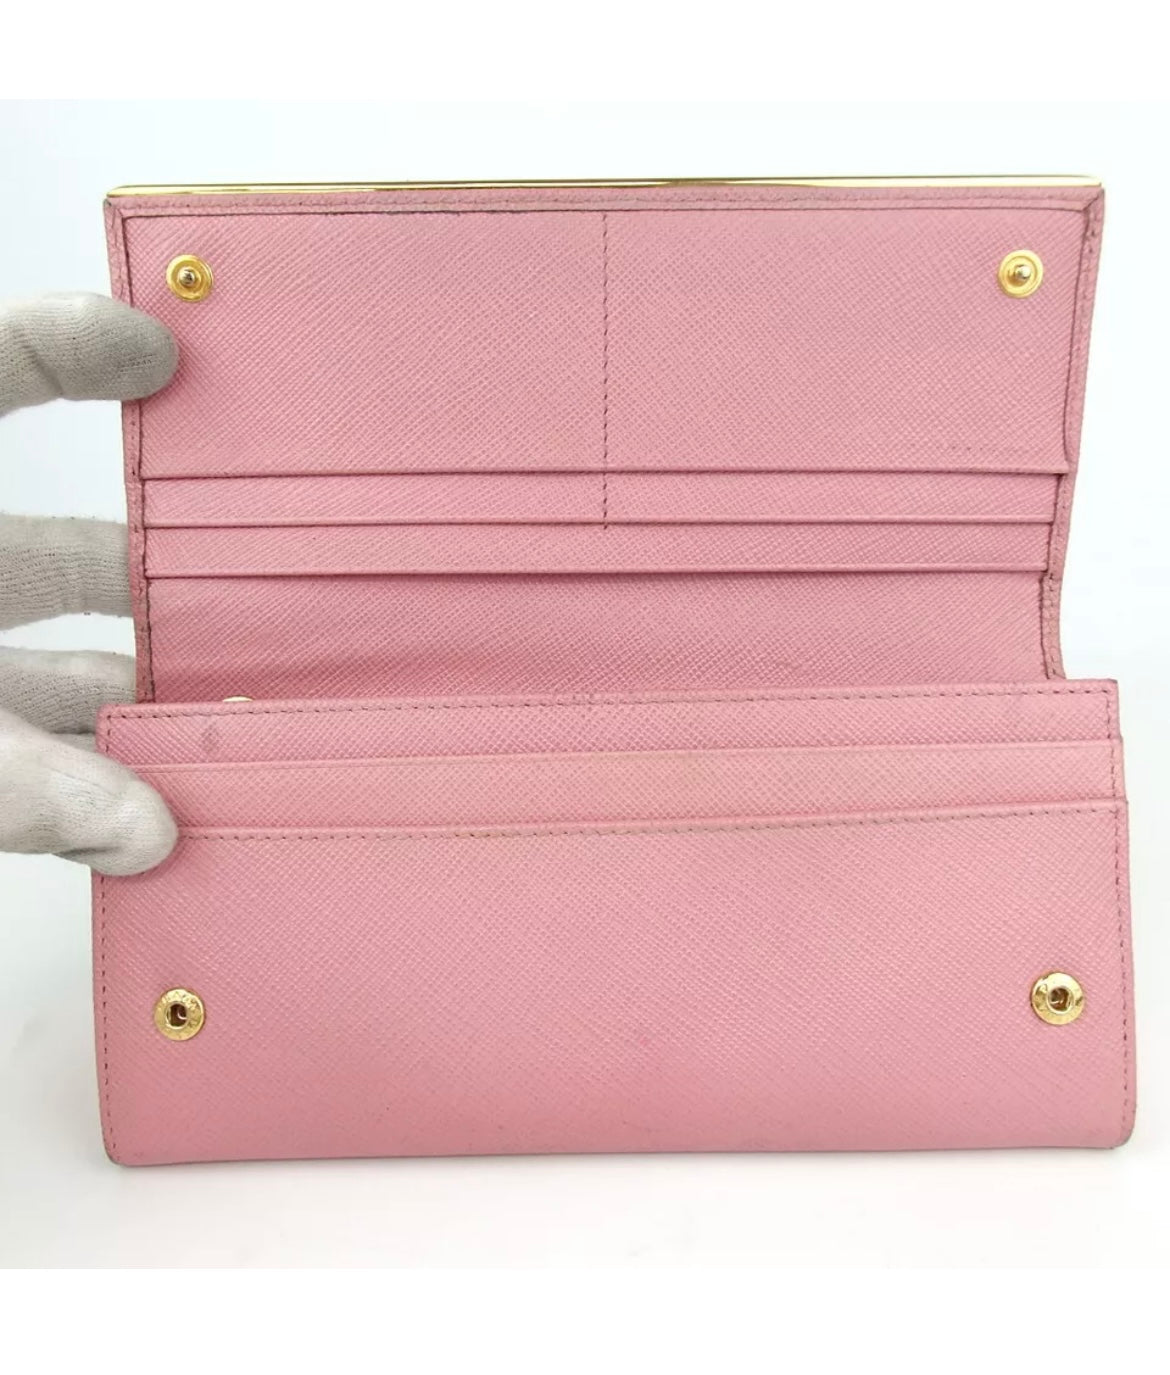 SOLD! Prada Pink Wallet